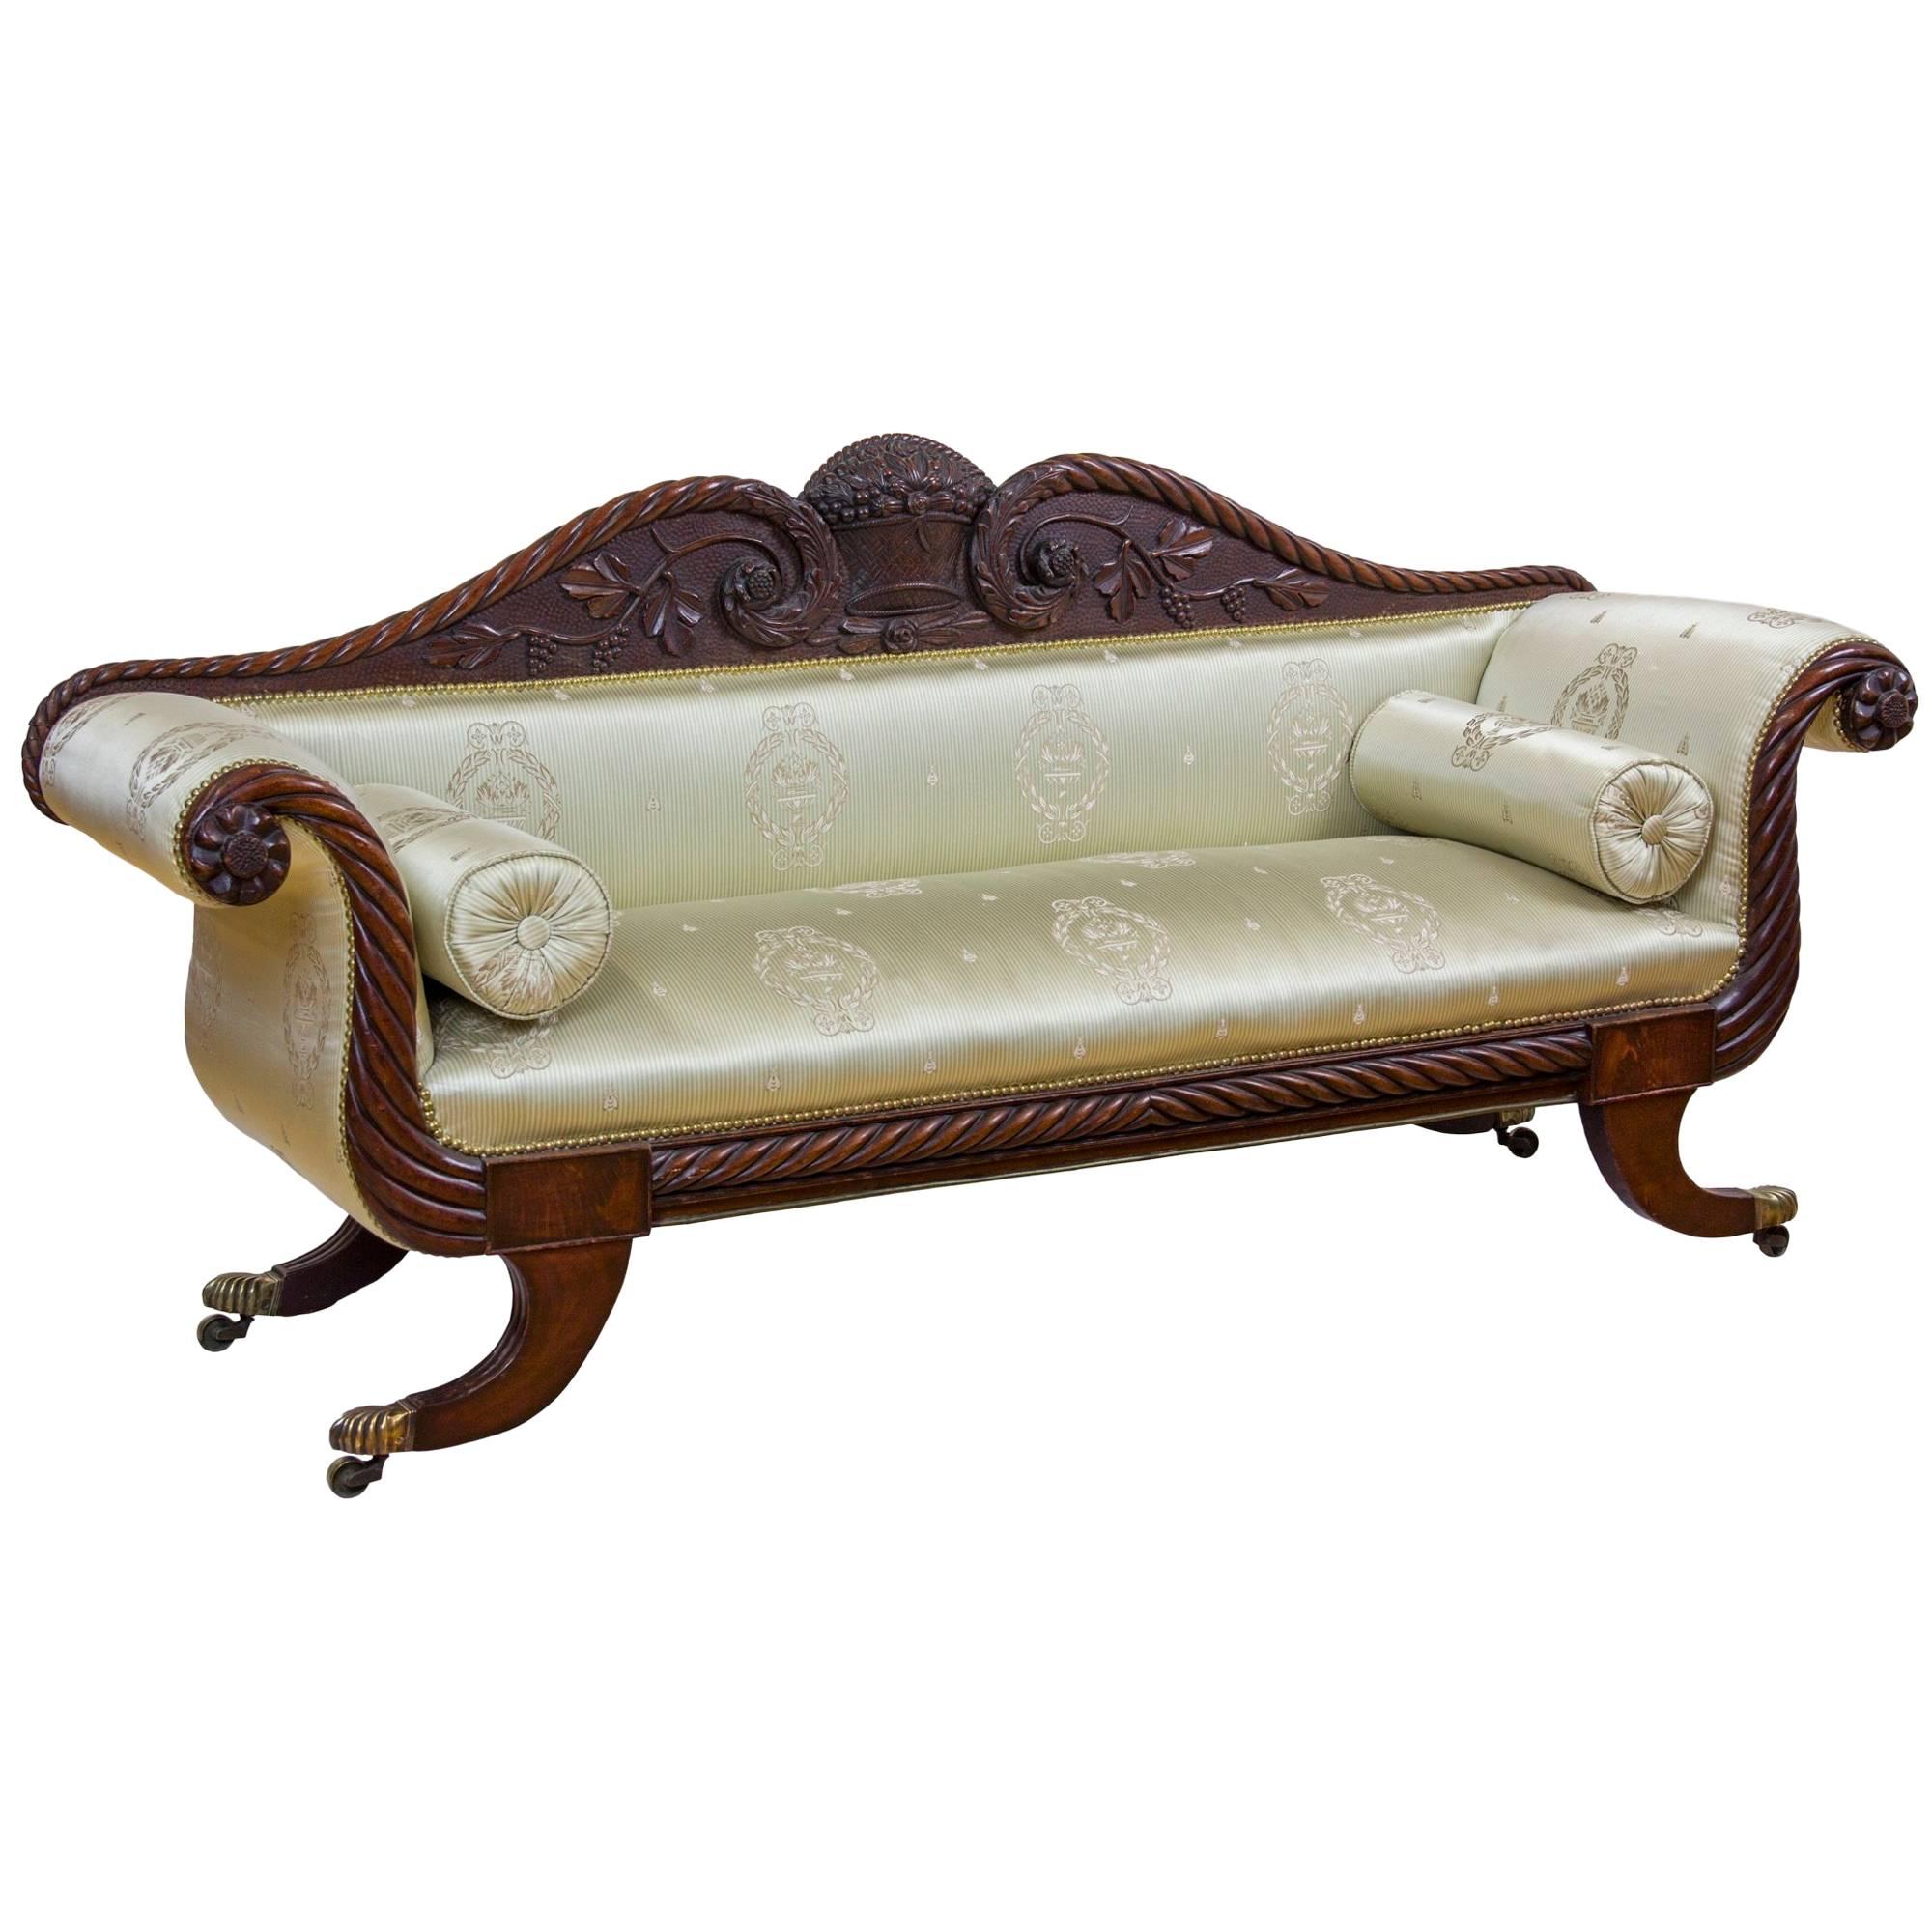 Carved Mahogany Classical Sofa, Salem circa 1815-1825 Attributed Samuel McIntire For Sale